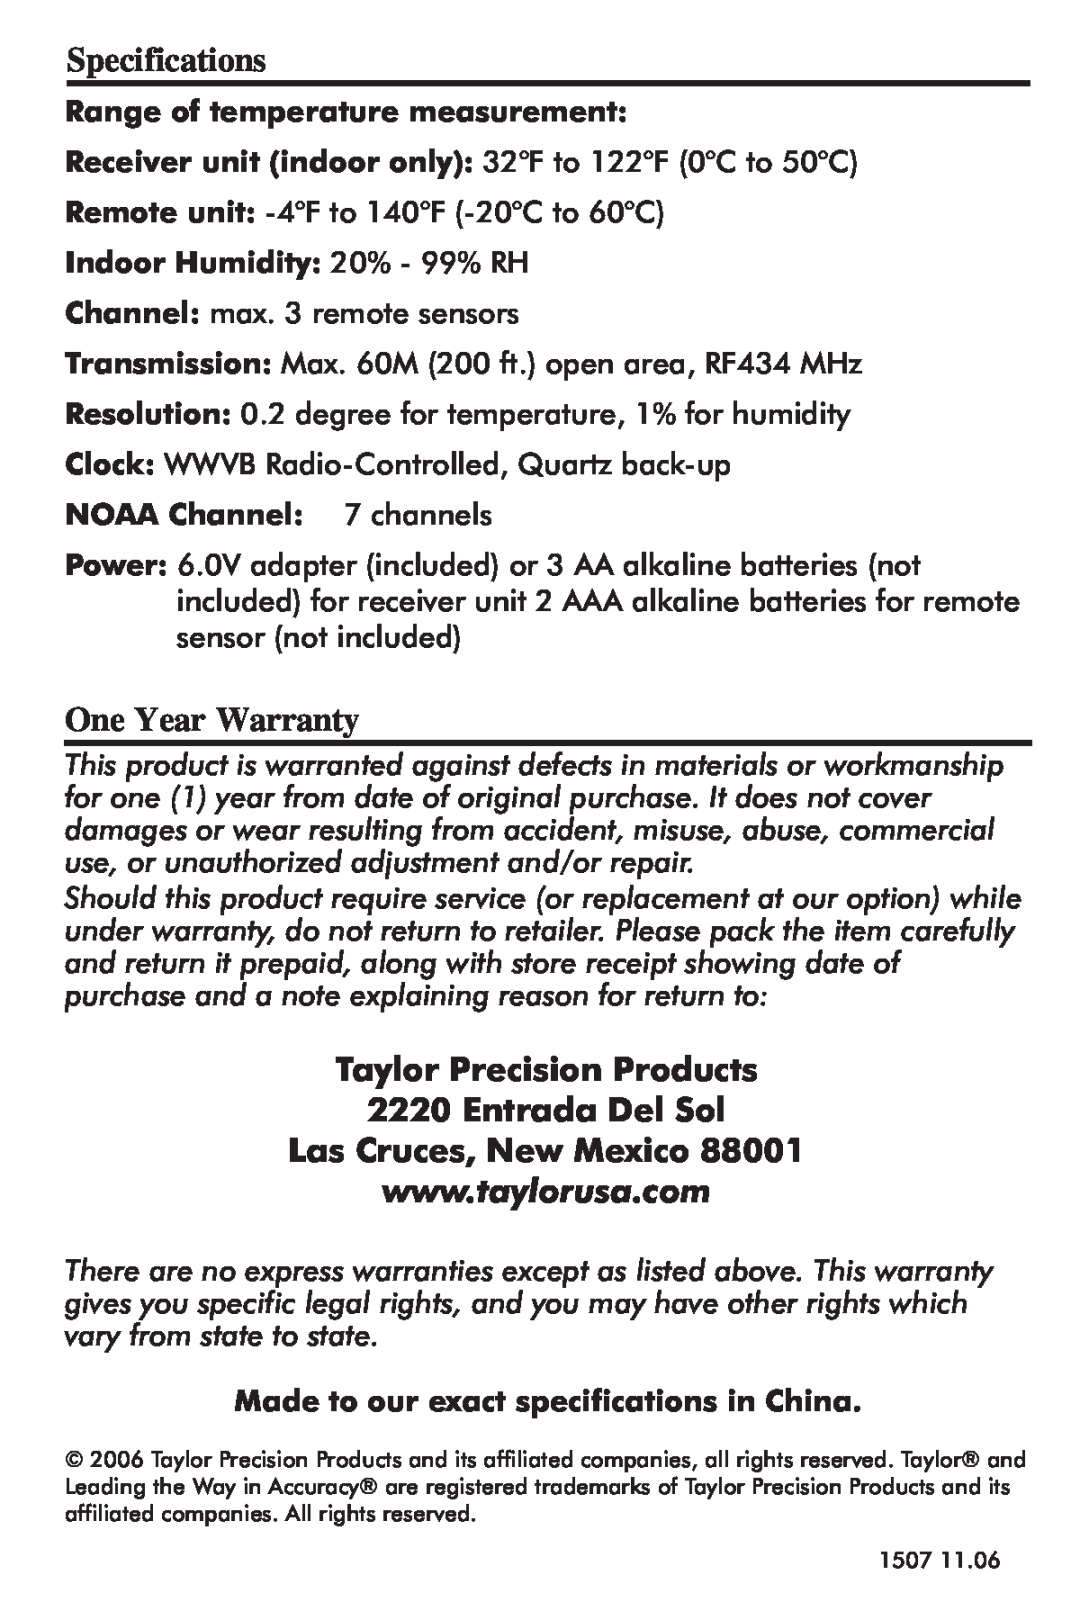 Taylor 1507 Specifications, One Year Warranty, Taylor Precision Products 2220 Entrada Del Sol Las Cruces, New Mexico 